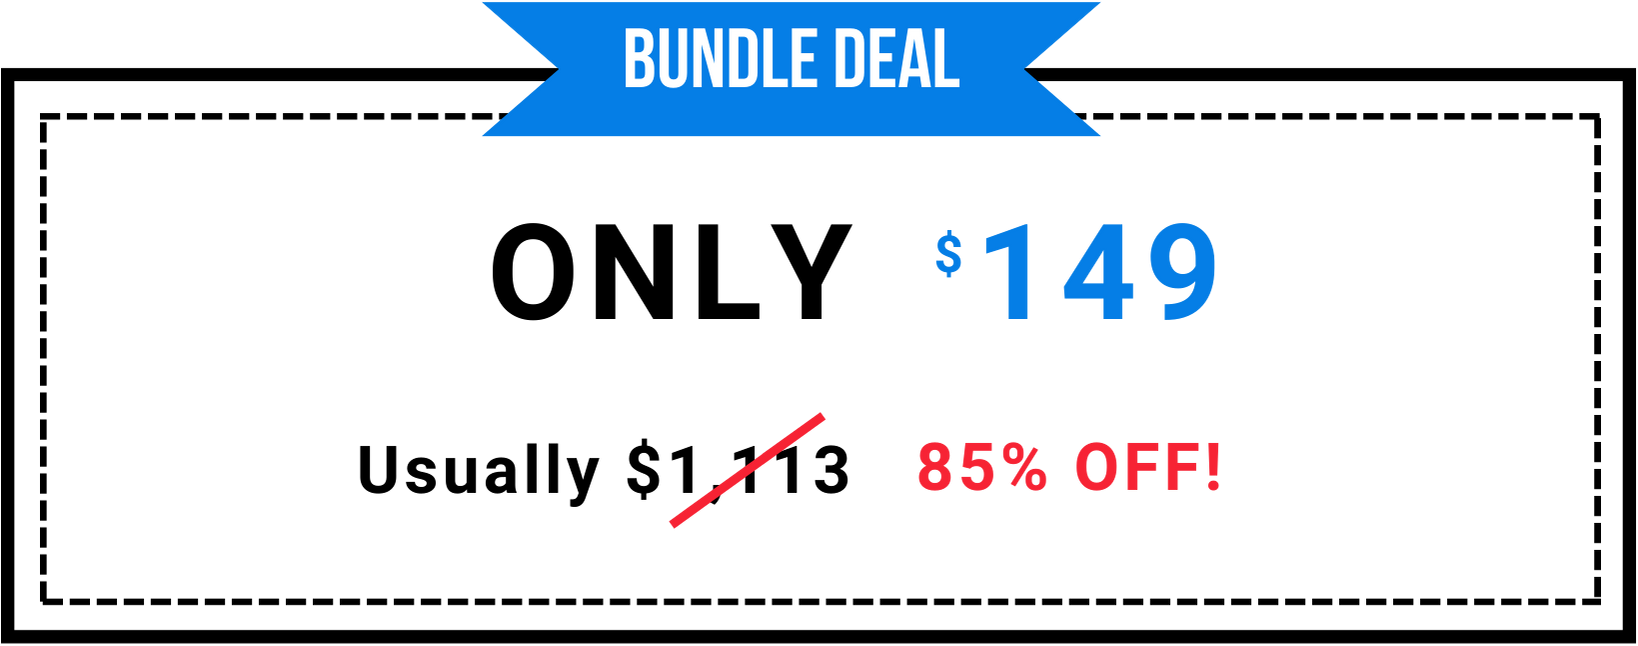 Bundle deal $149